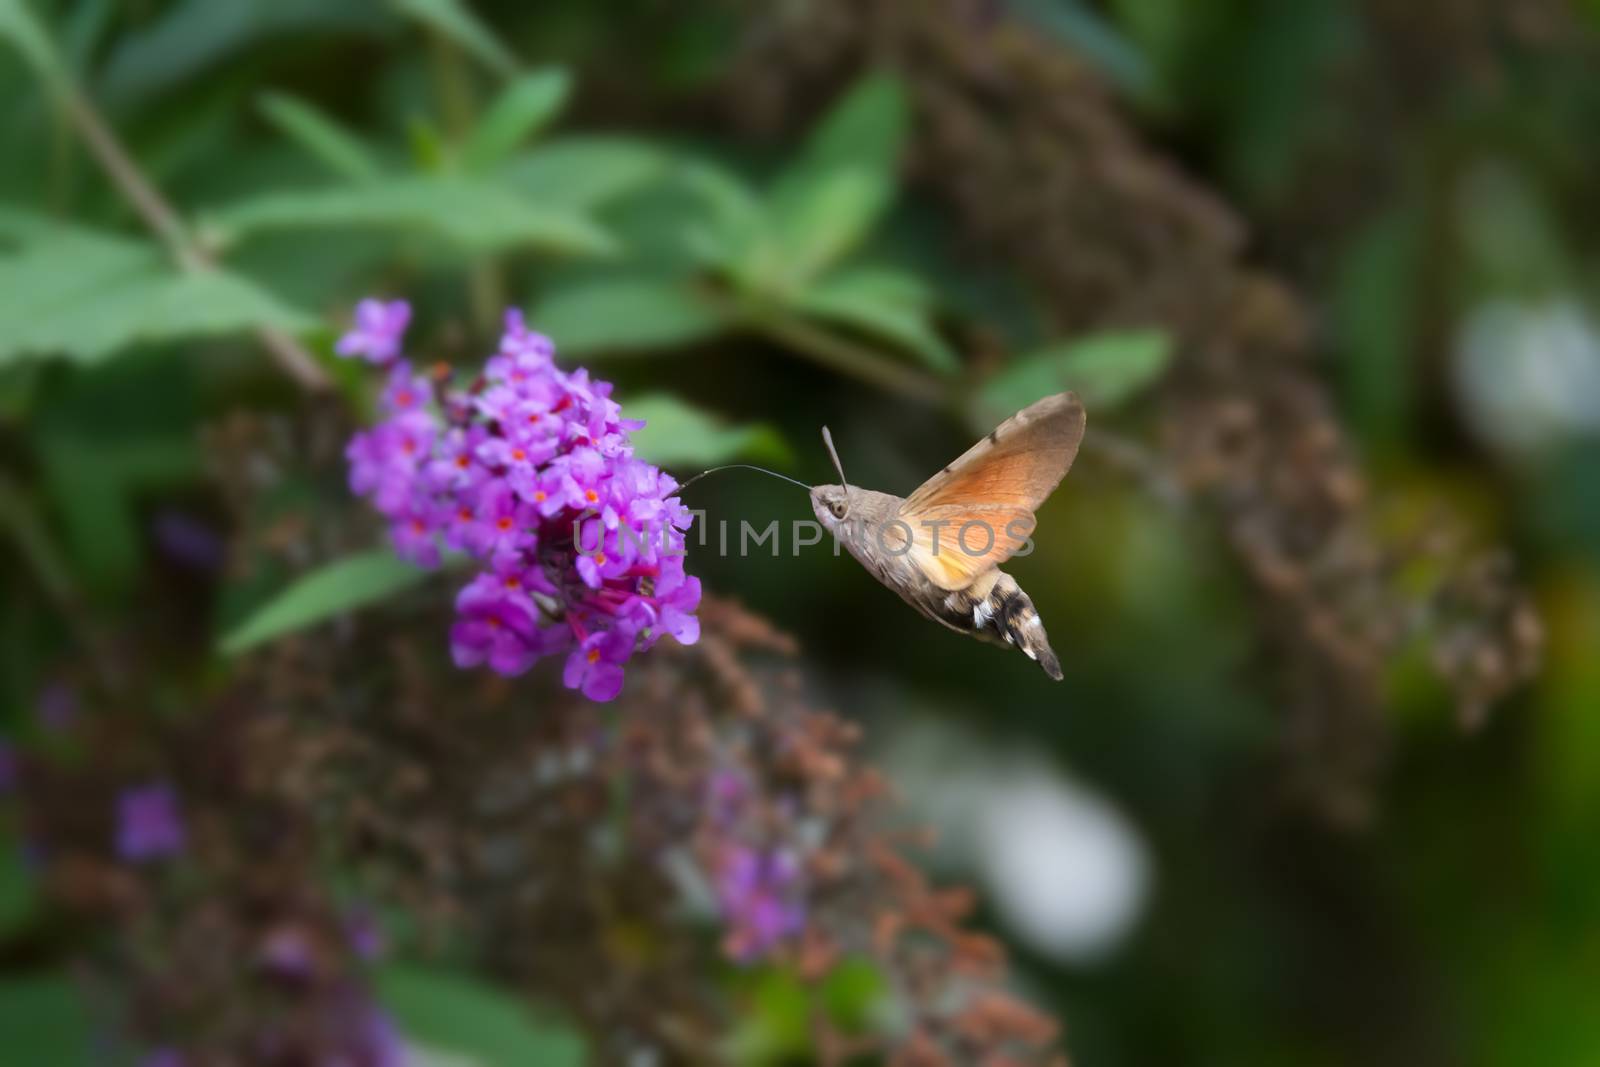 Hummingnird Hawk-moth, Macroglossum stellatarum, feeding on nectar from purple buddleia flower.